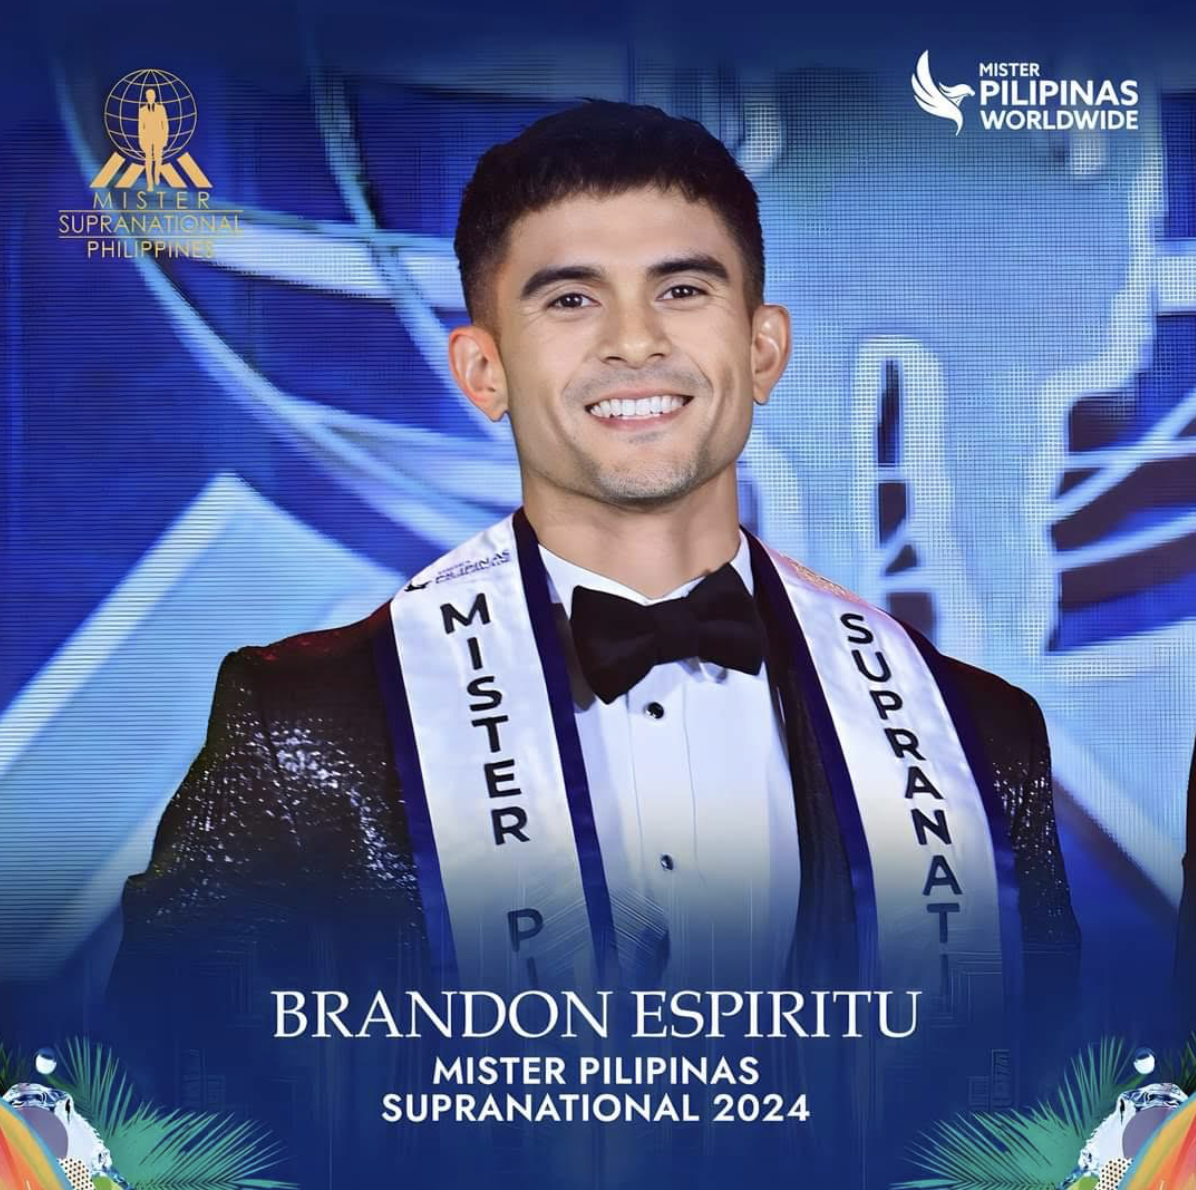 Mister Supranational Philippines Brandon Espiritu/THE FILIPINO FESTIVAL FACEBOOK PHOTO